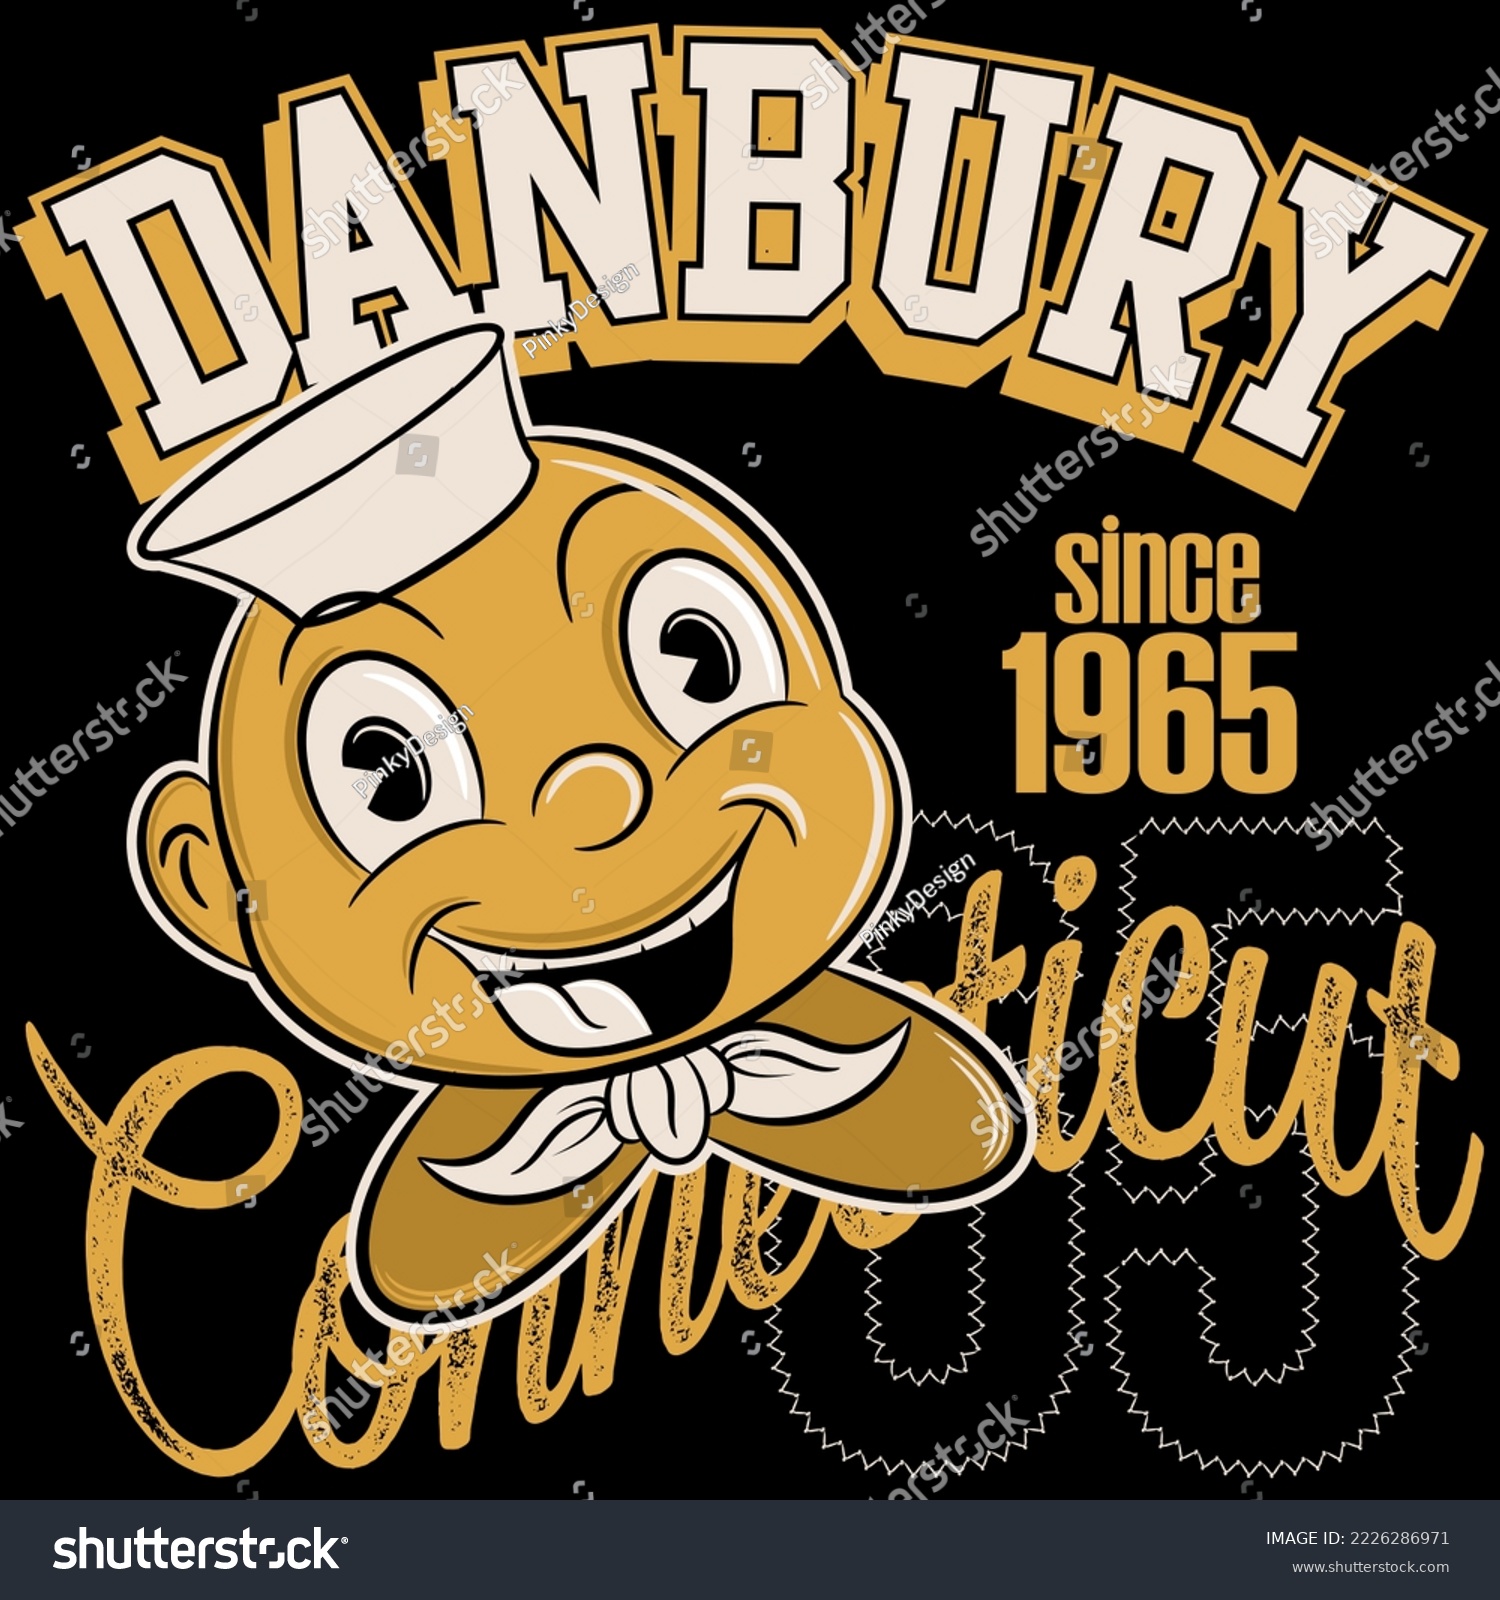 SVG of Illustration Cool cartoon with text Danbury Connecticut Since 1965 Vintage Design. svg